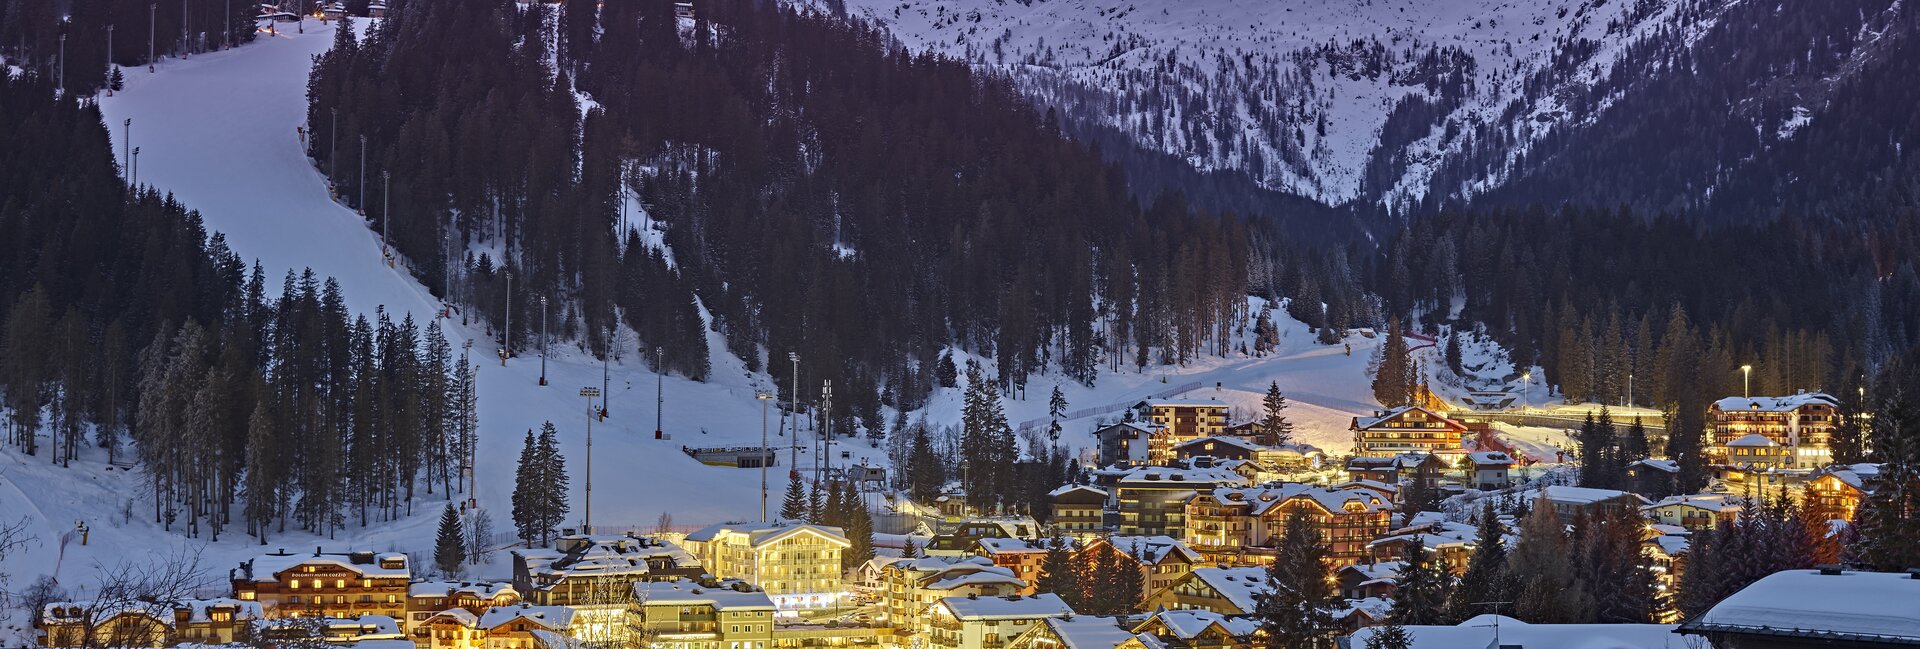 Madonna di Campiglio ski resort